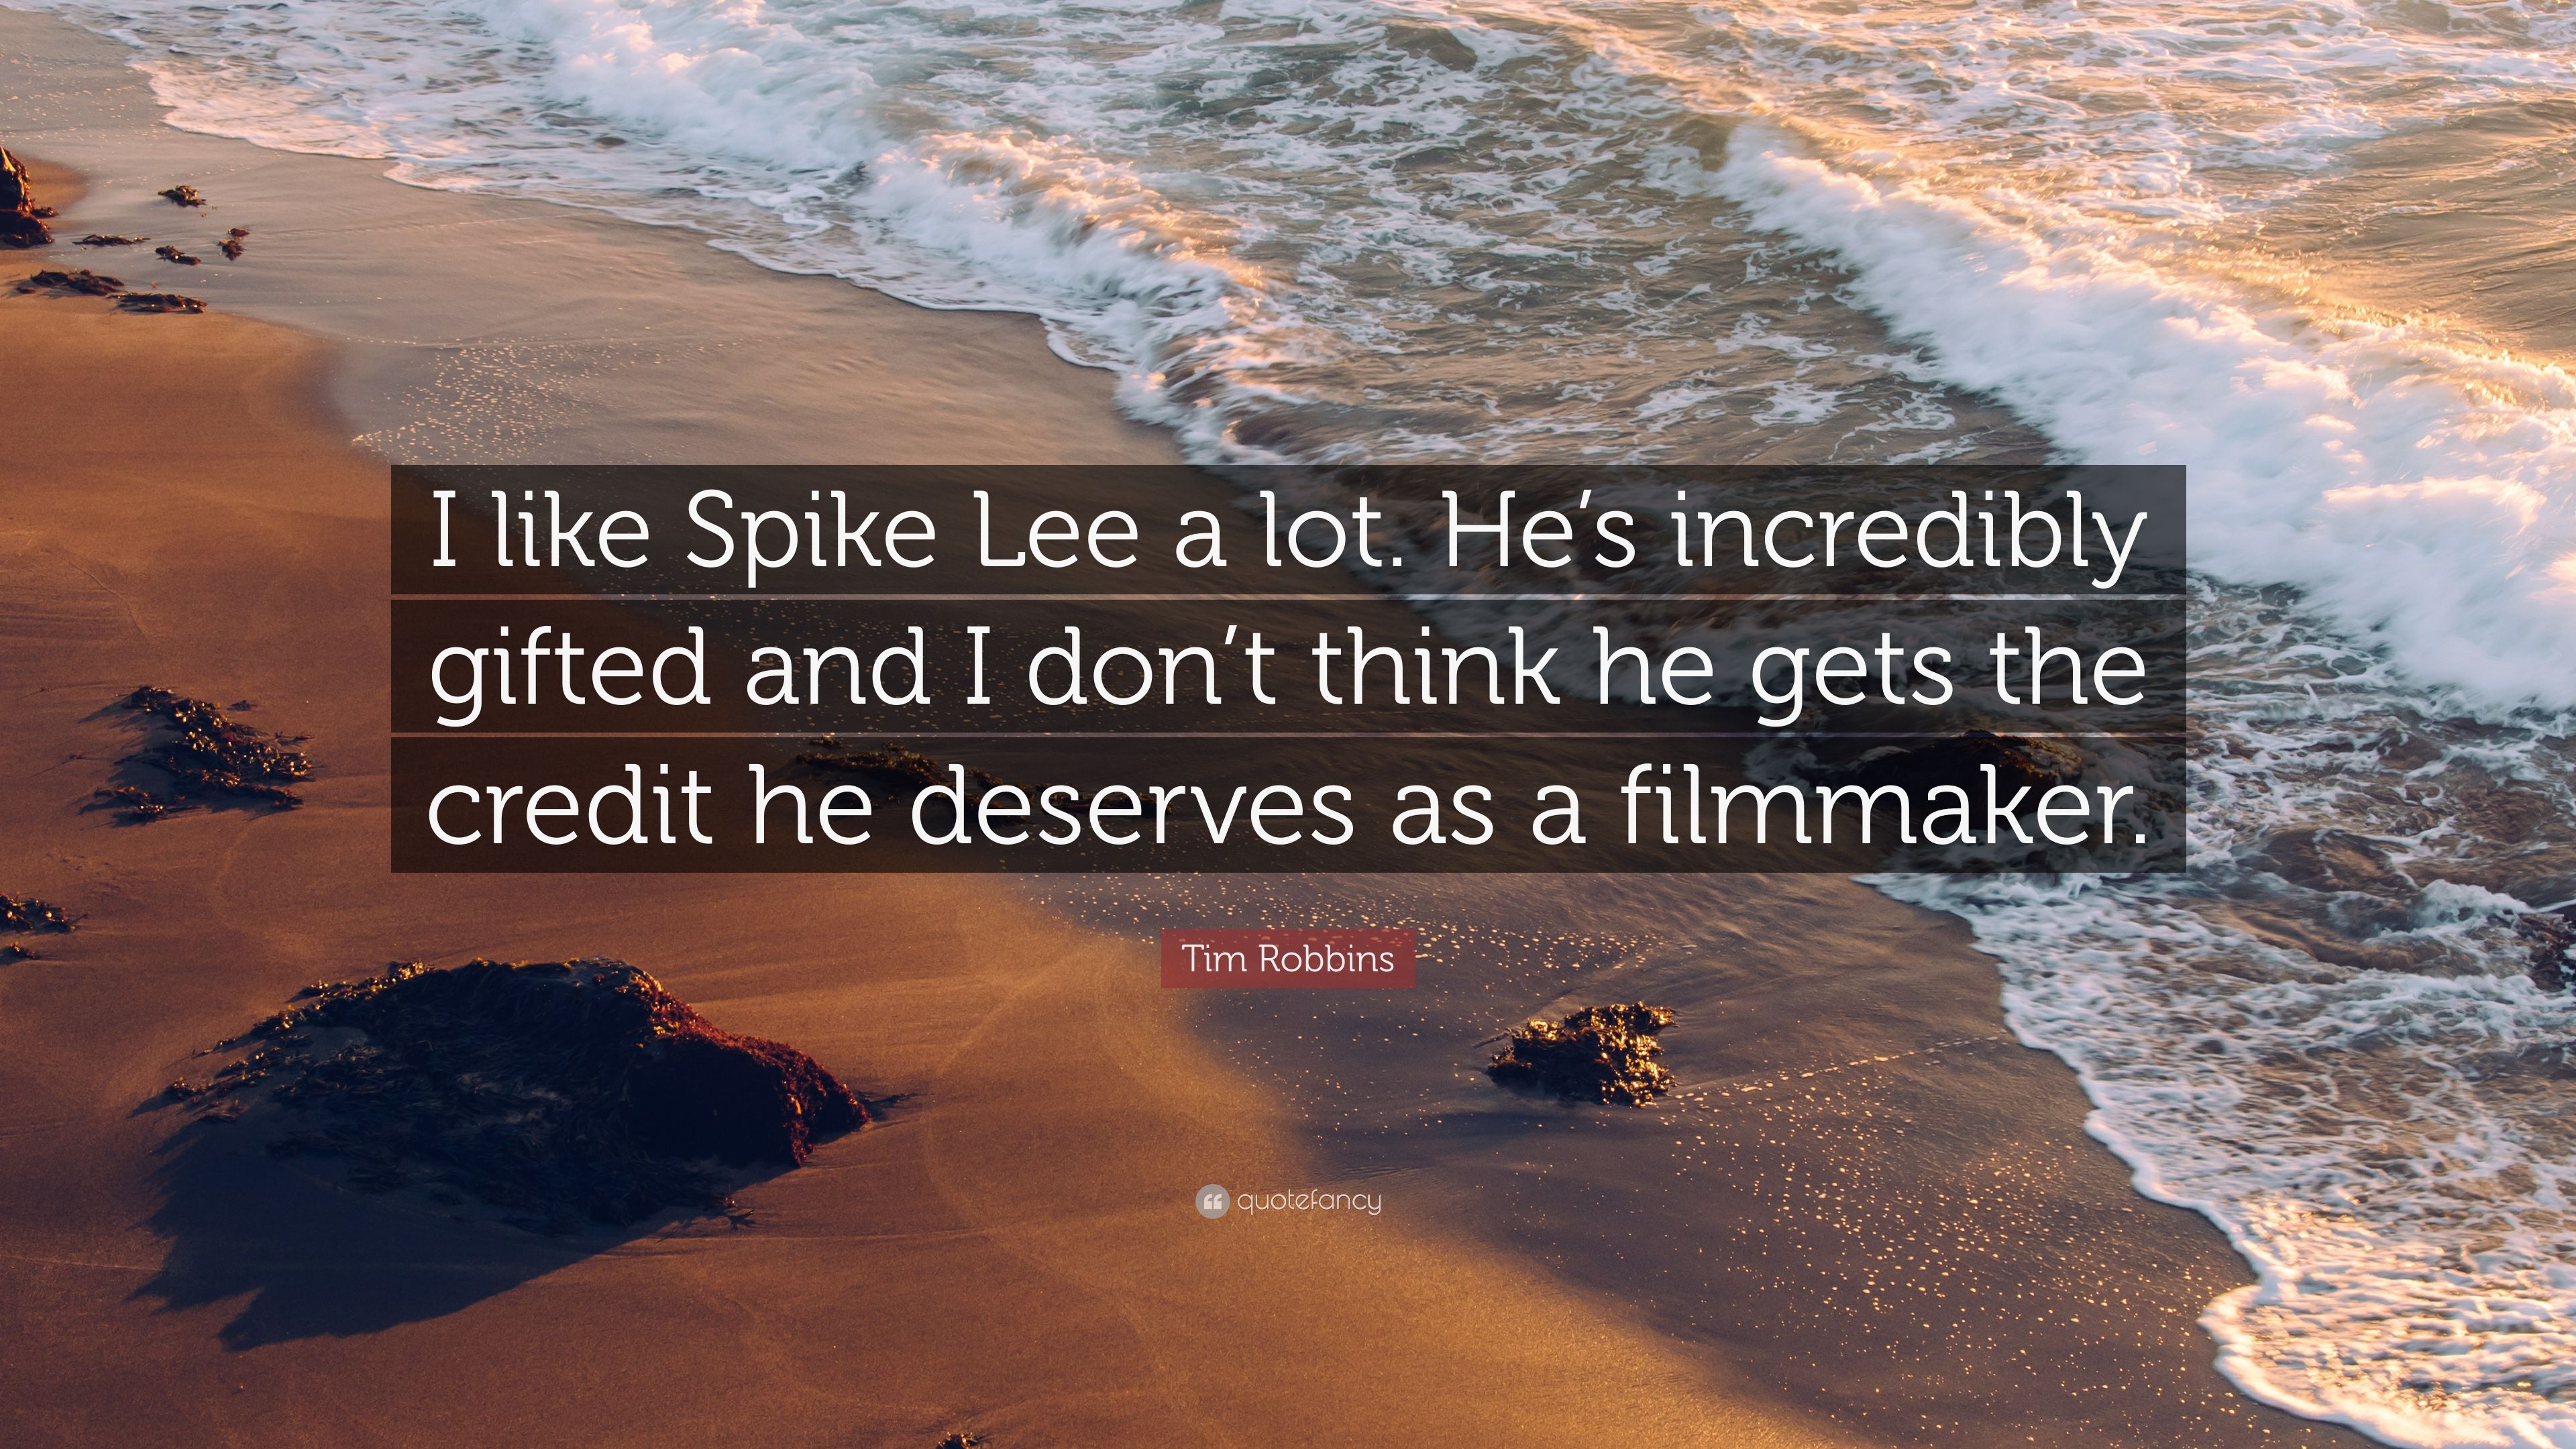 Tim Robbins Quote: “I like Spike Lee a lot. He's incredibly